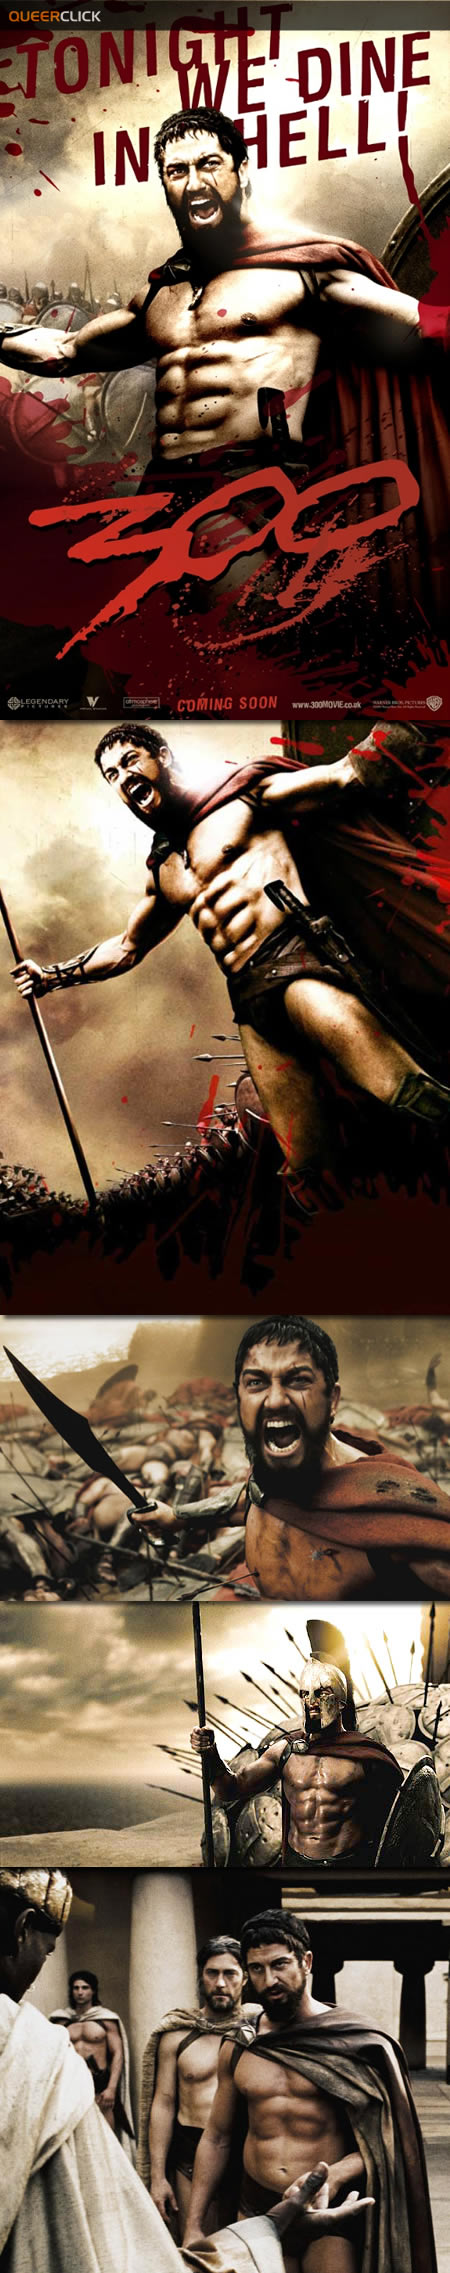 Gerard Butler as Leonidas in 300